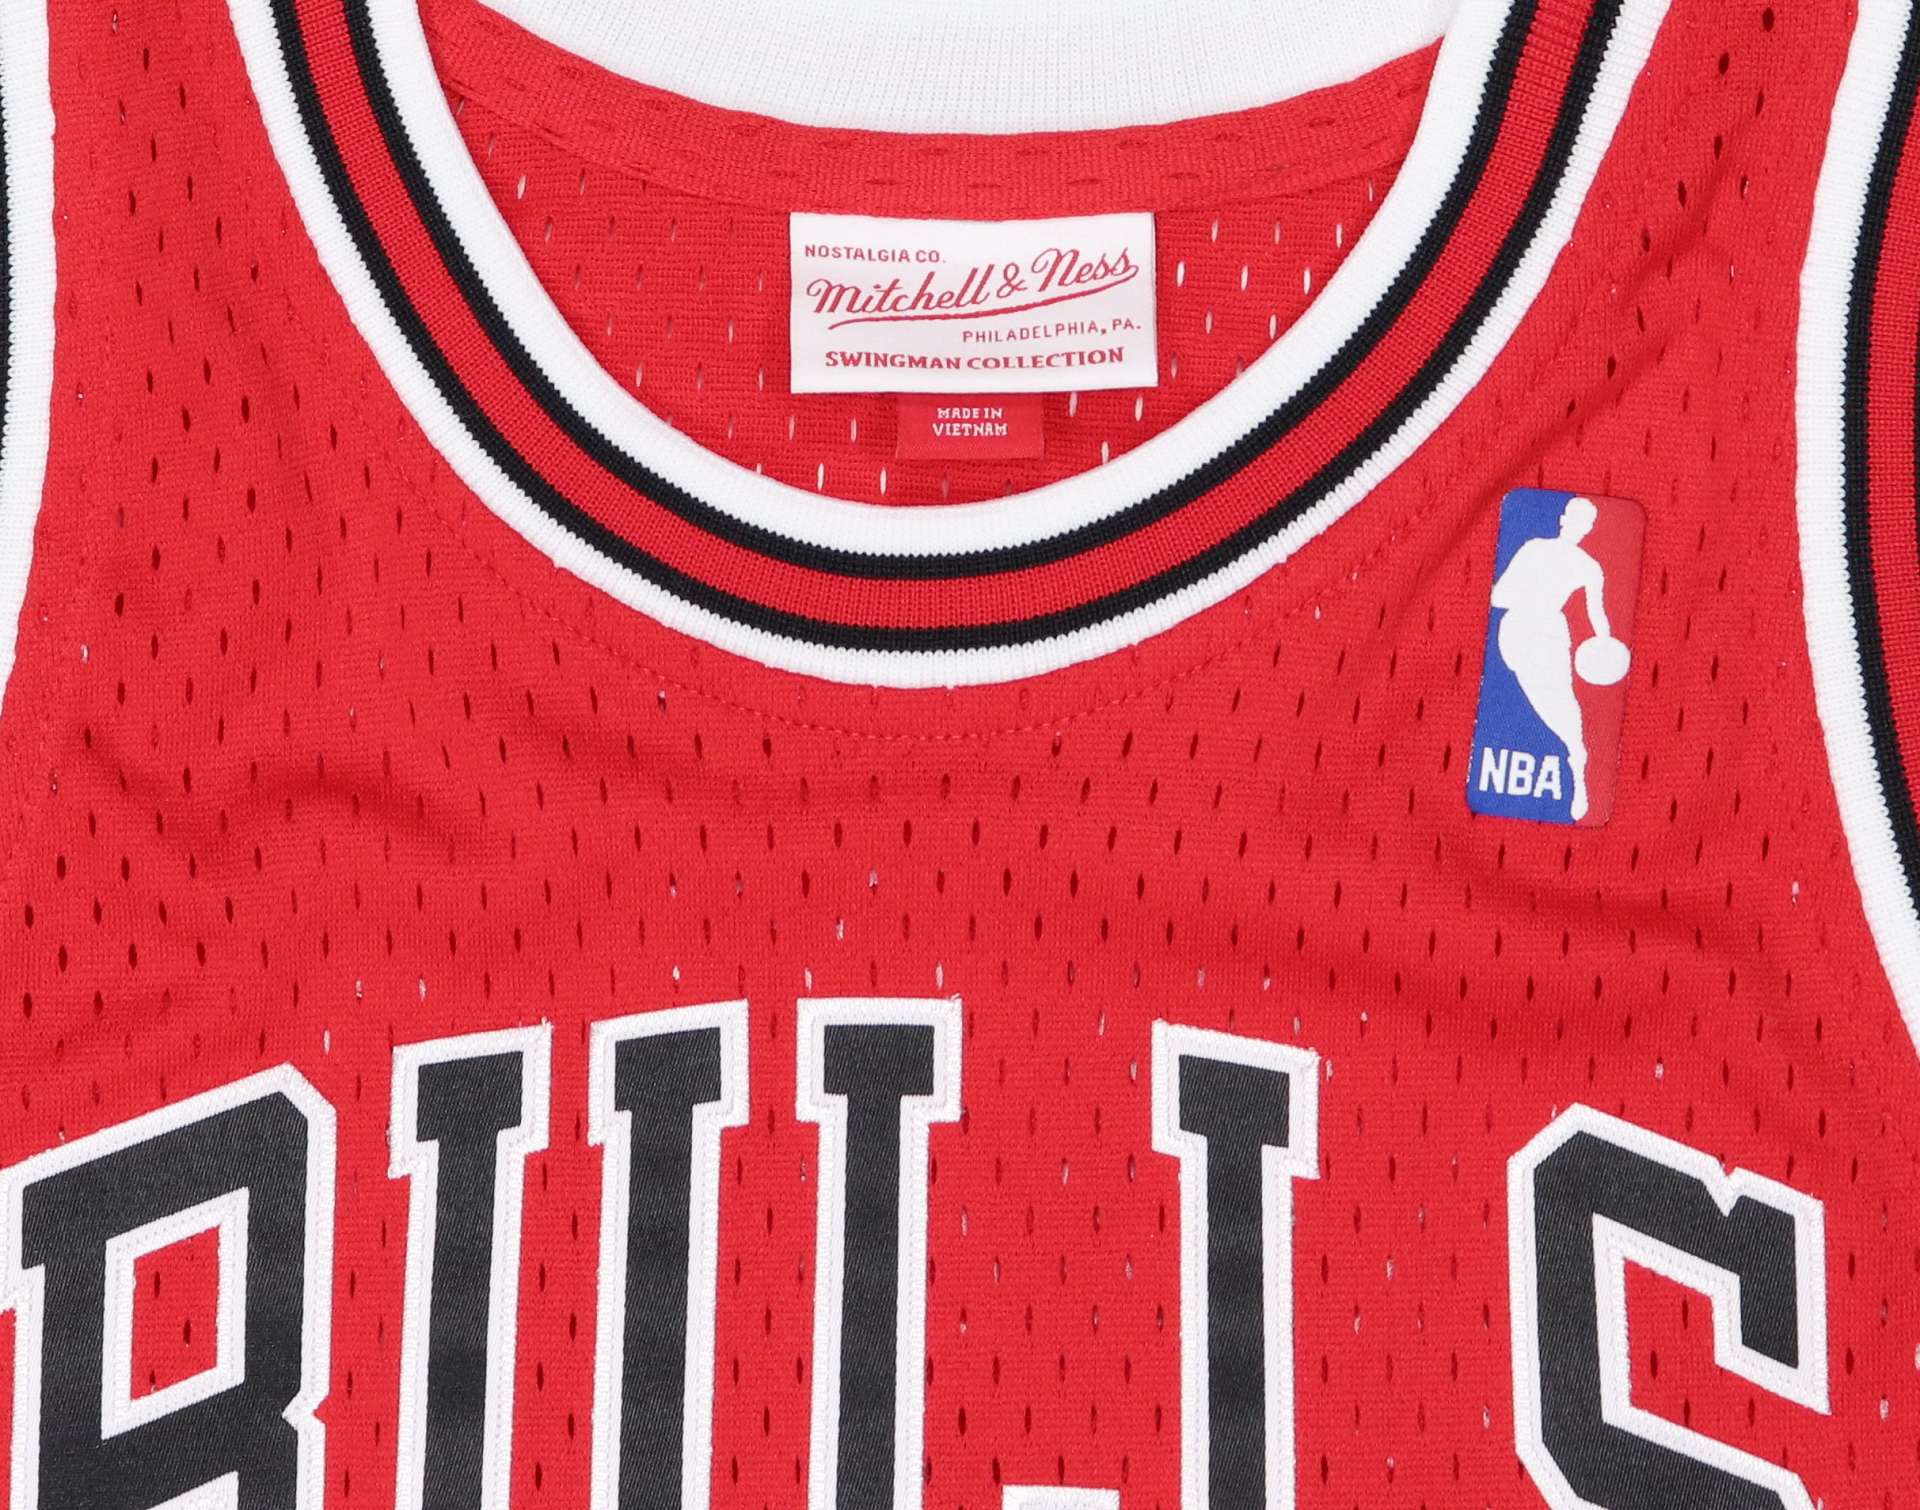 Dennis Rodman #91 Chicago Bulls NBA Kids Swingman Road Jersey Mitchell & Ness